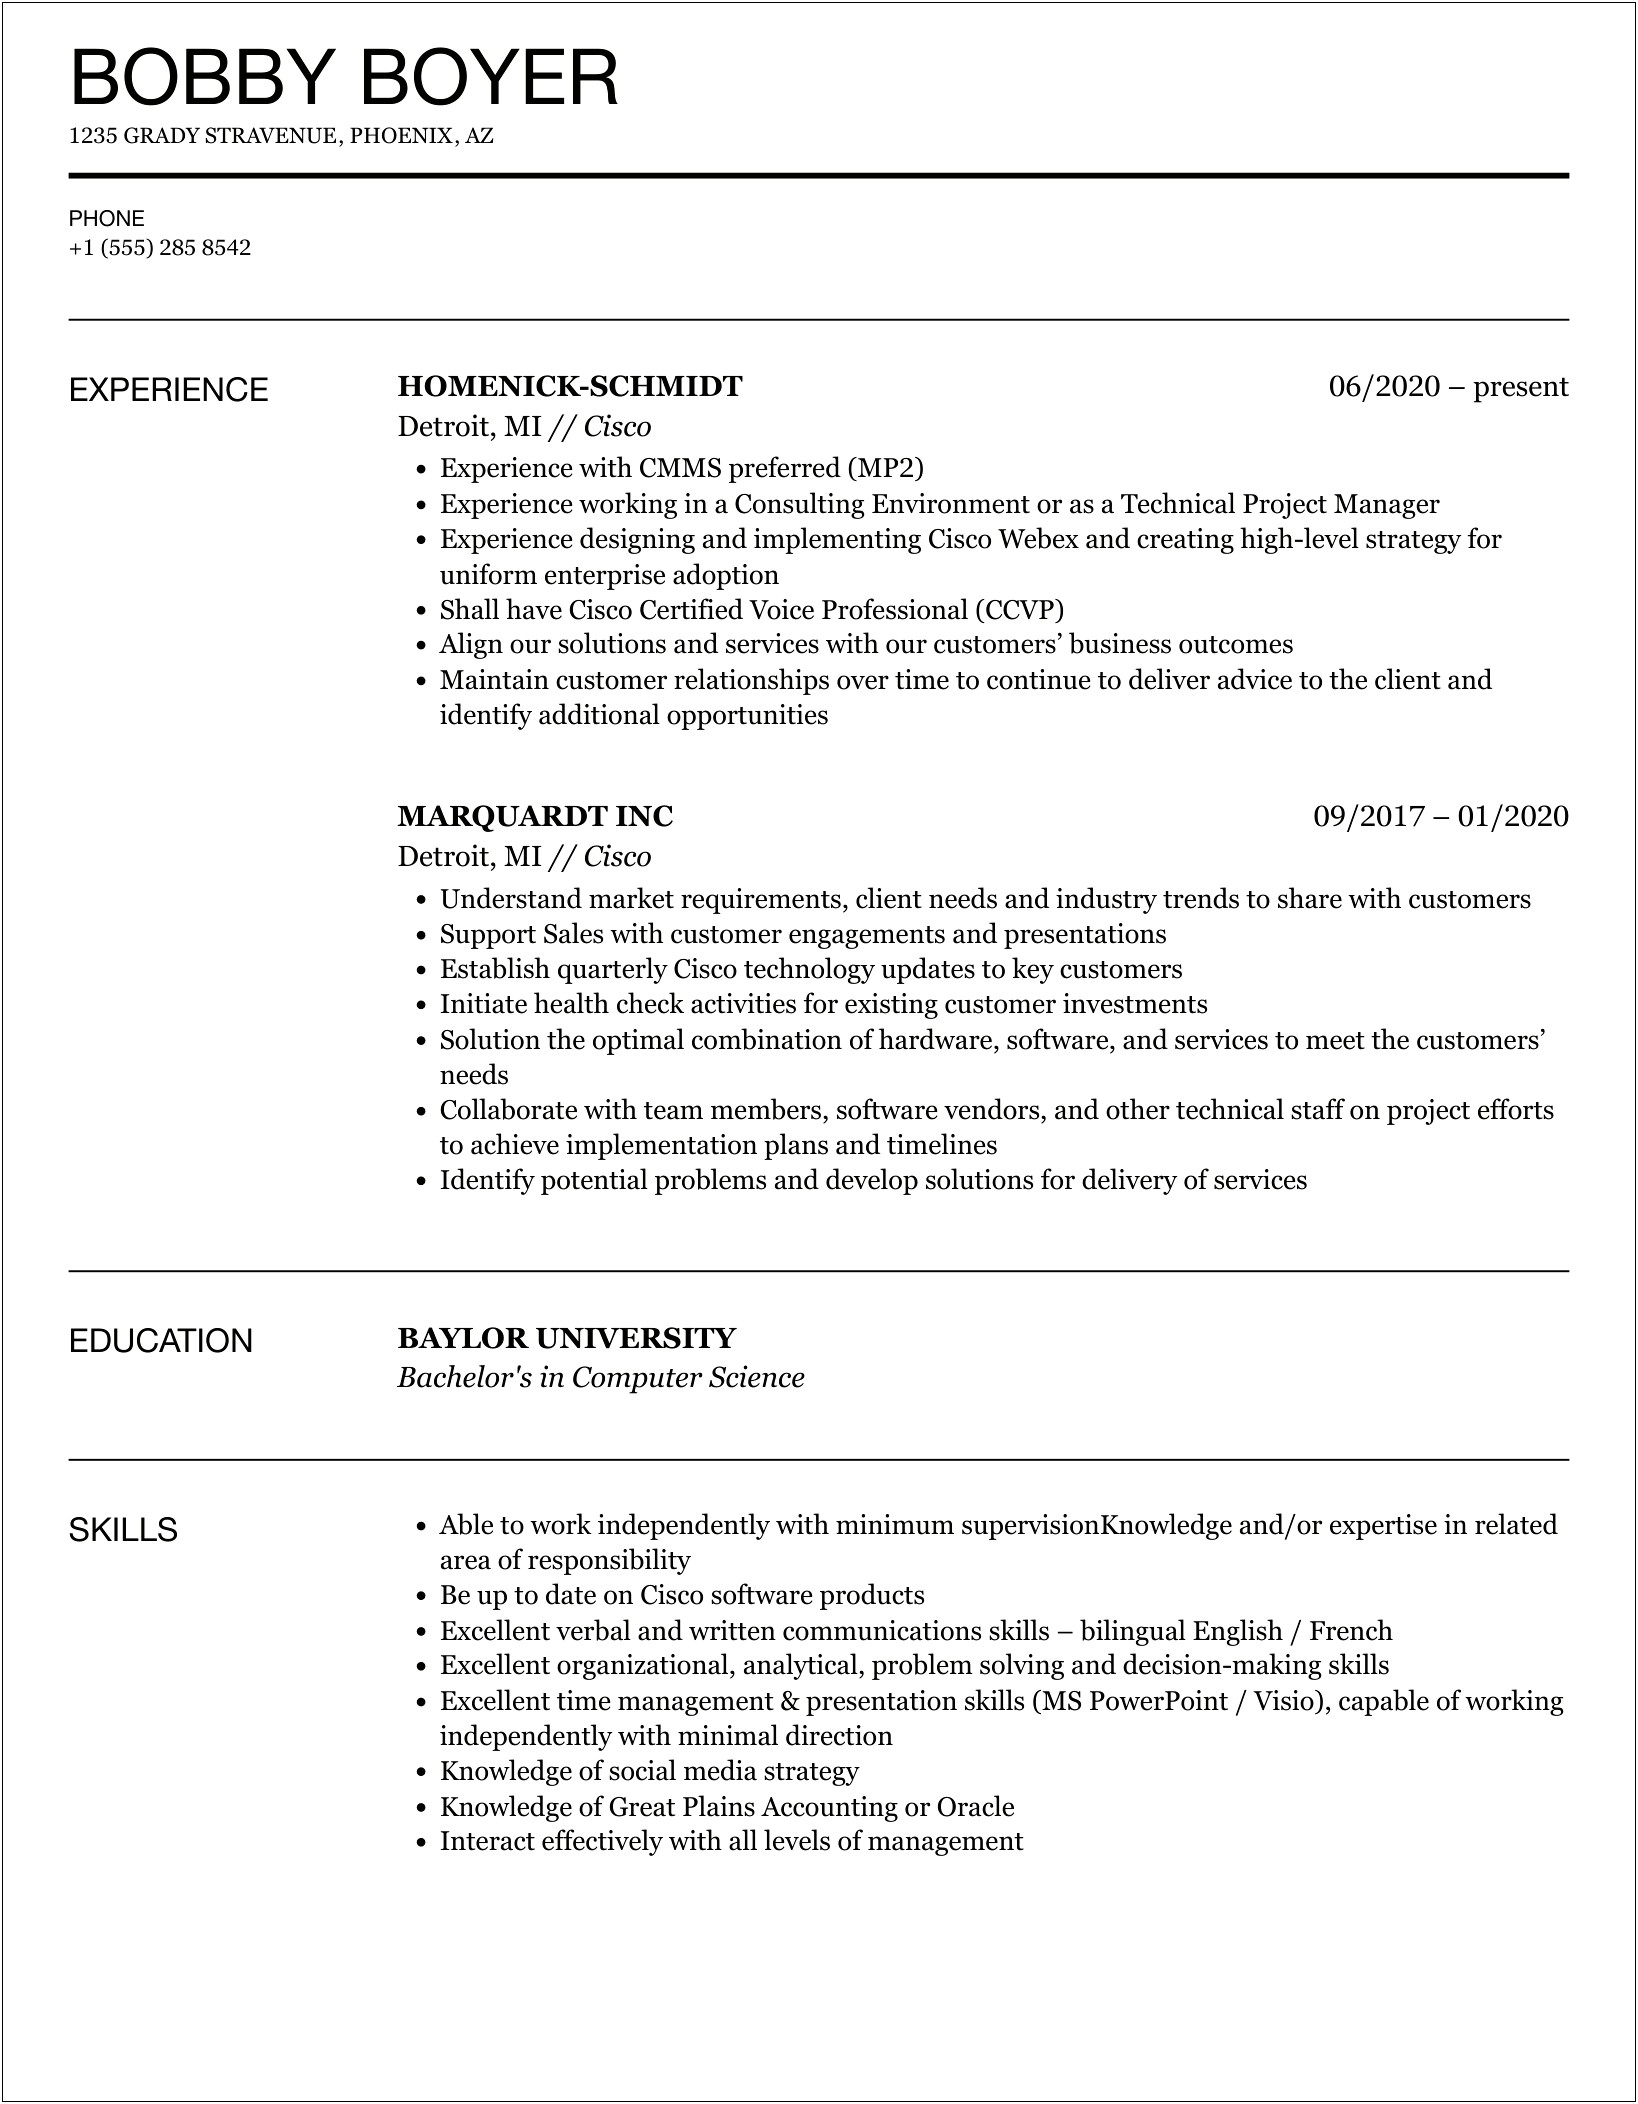 Sample Resume With Com Tia Credentials